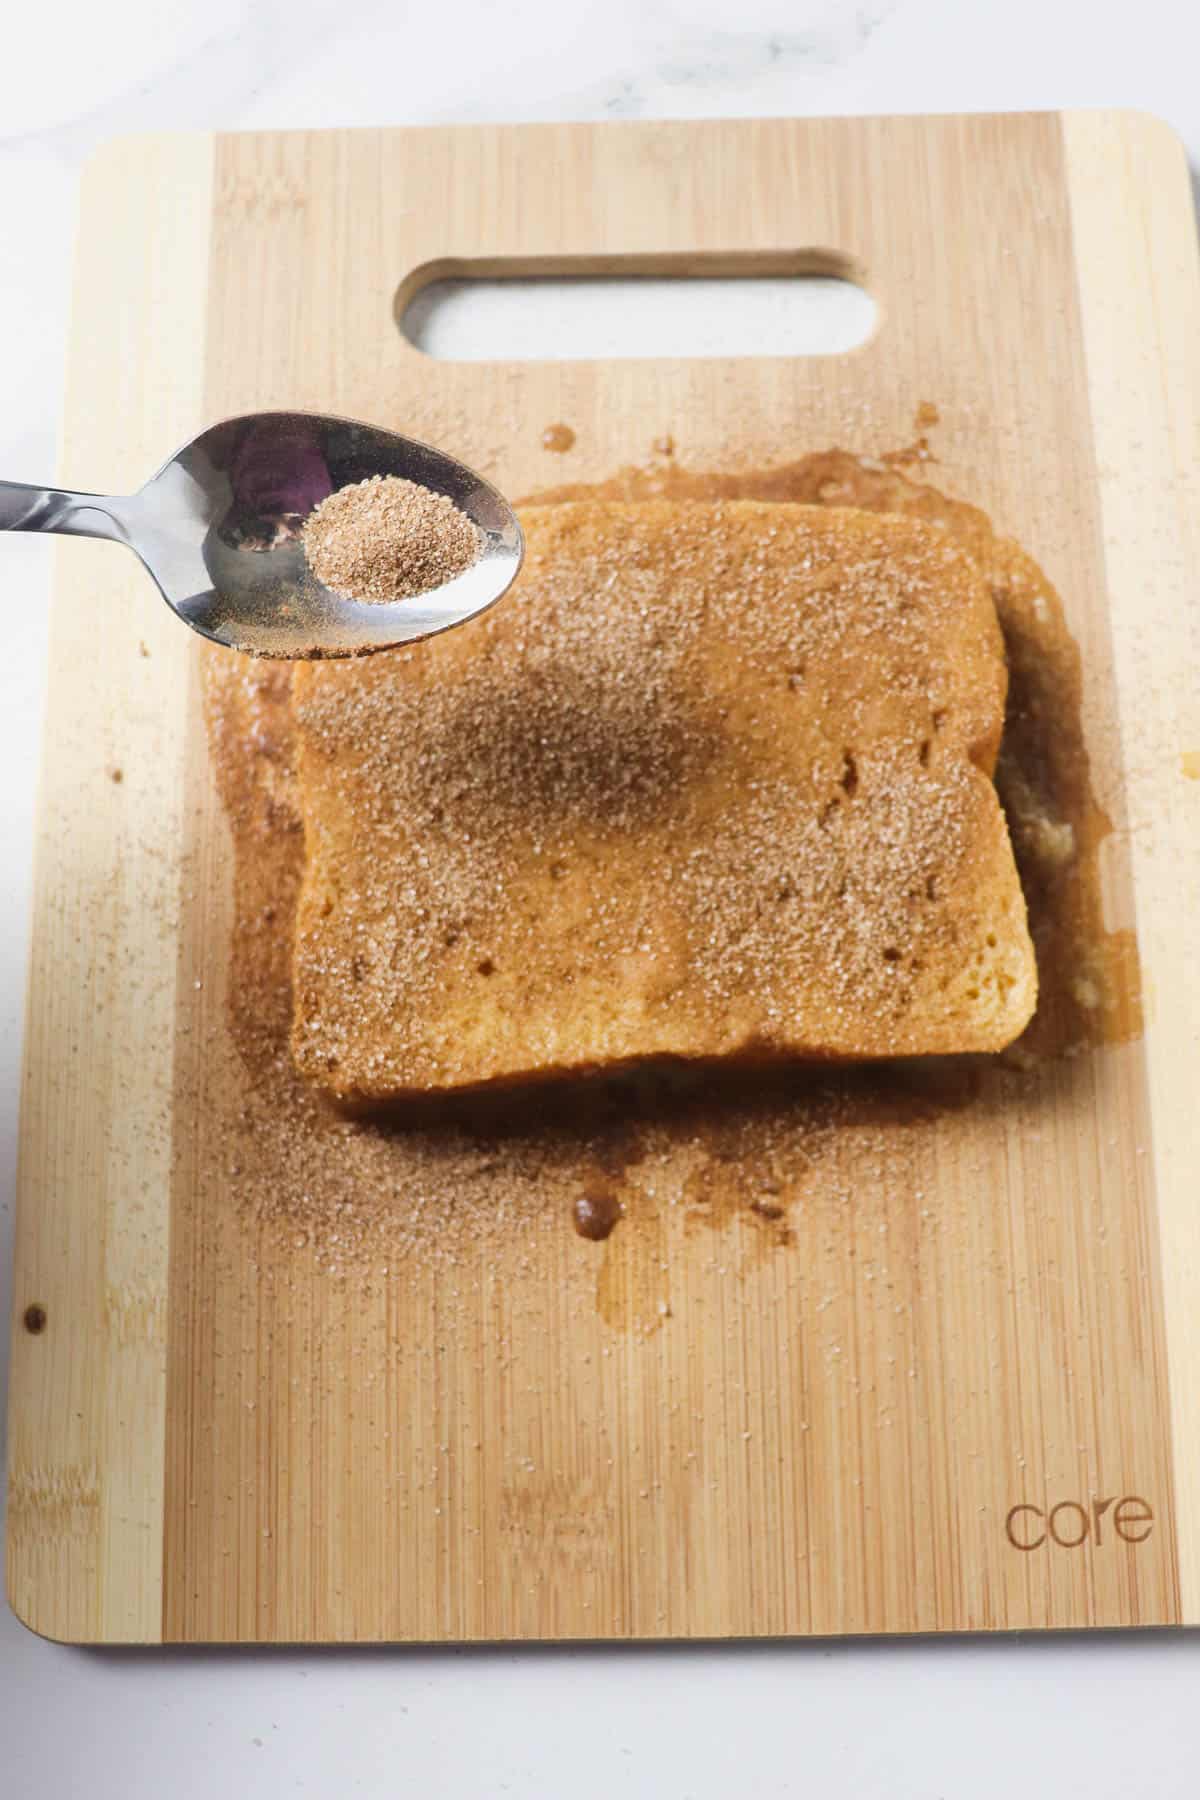 sprinkling cinnamon sugar mixture on french toast slices